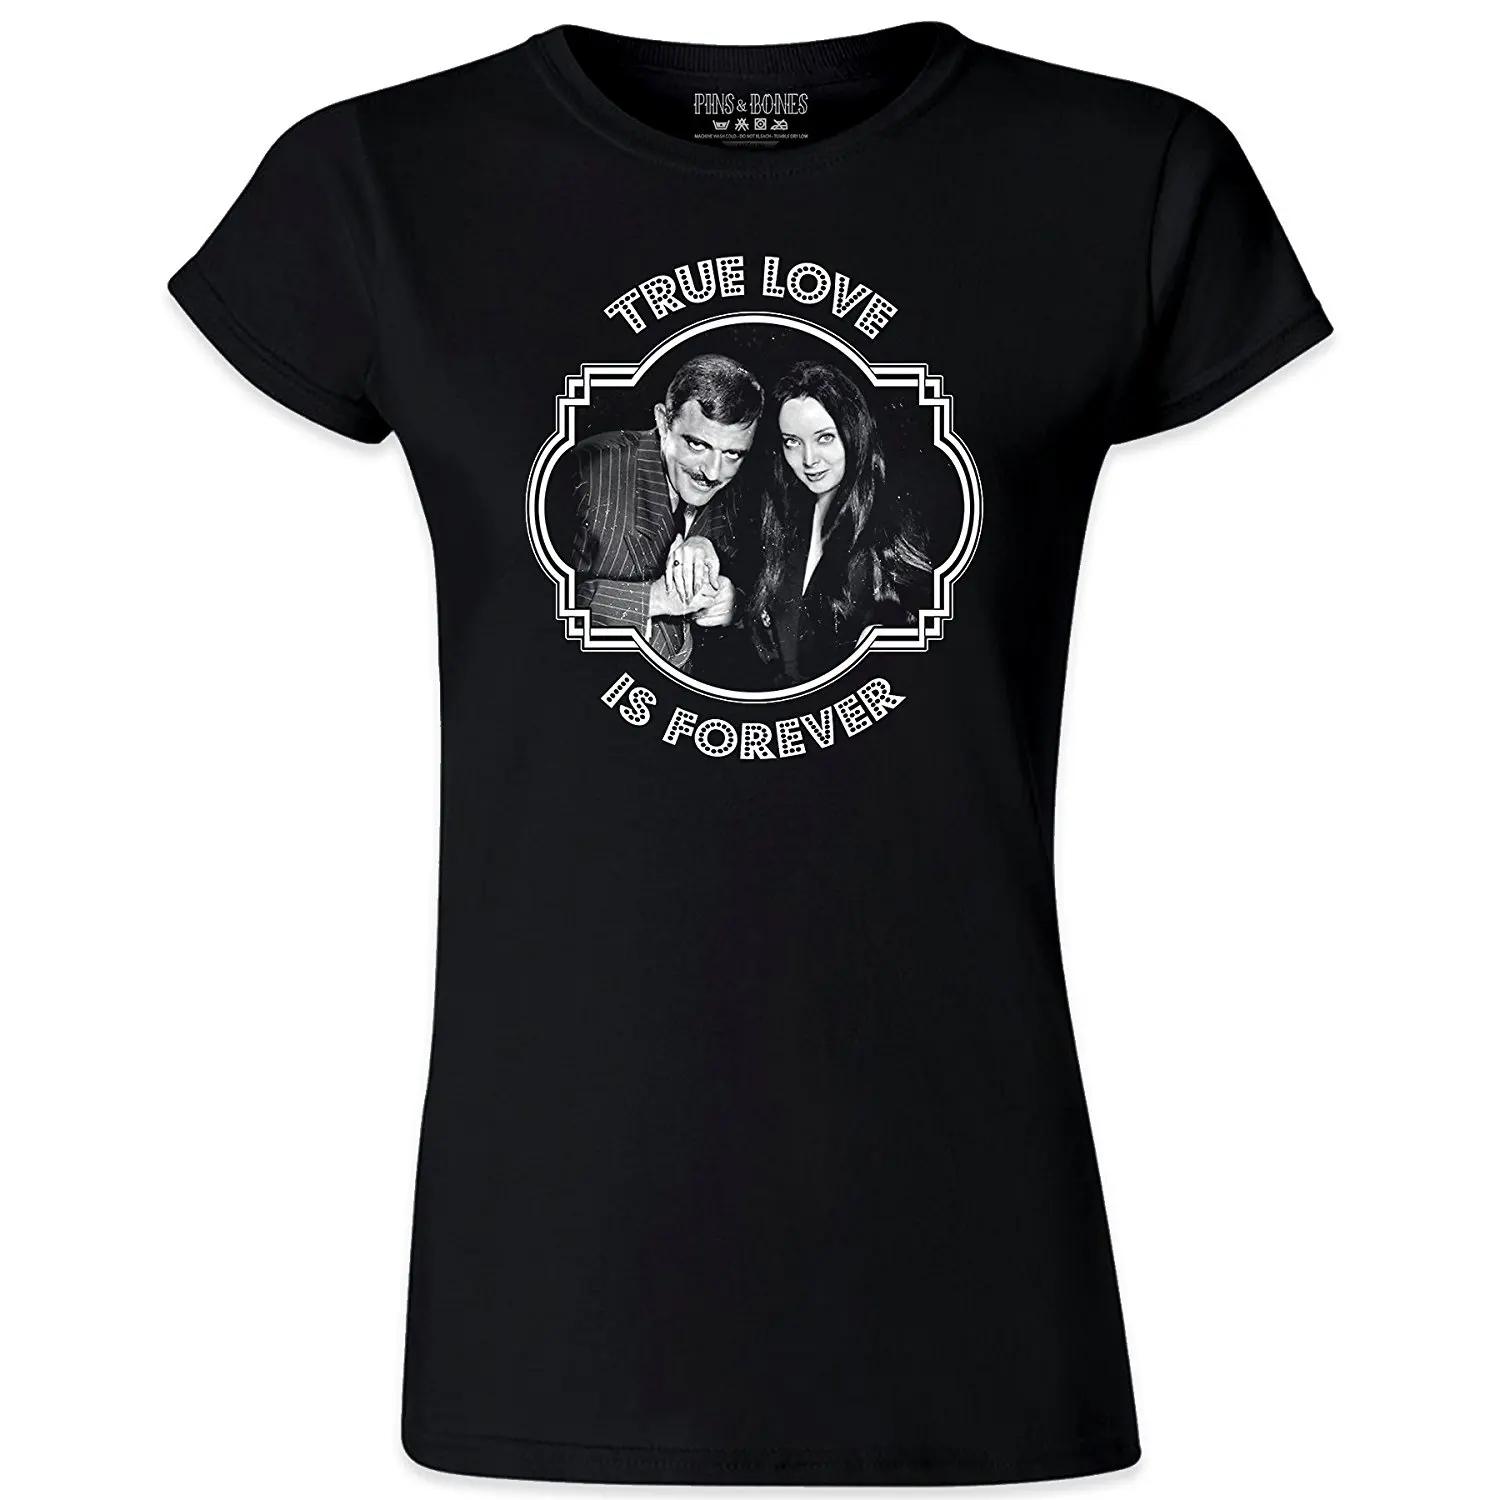 True Love Is Forever/семейная футболка с надписью «Morticia Gomez Addams» г. Брендовая одежда футболка в стиле Харадзюку новинка, хлопок